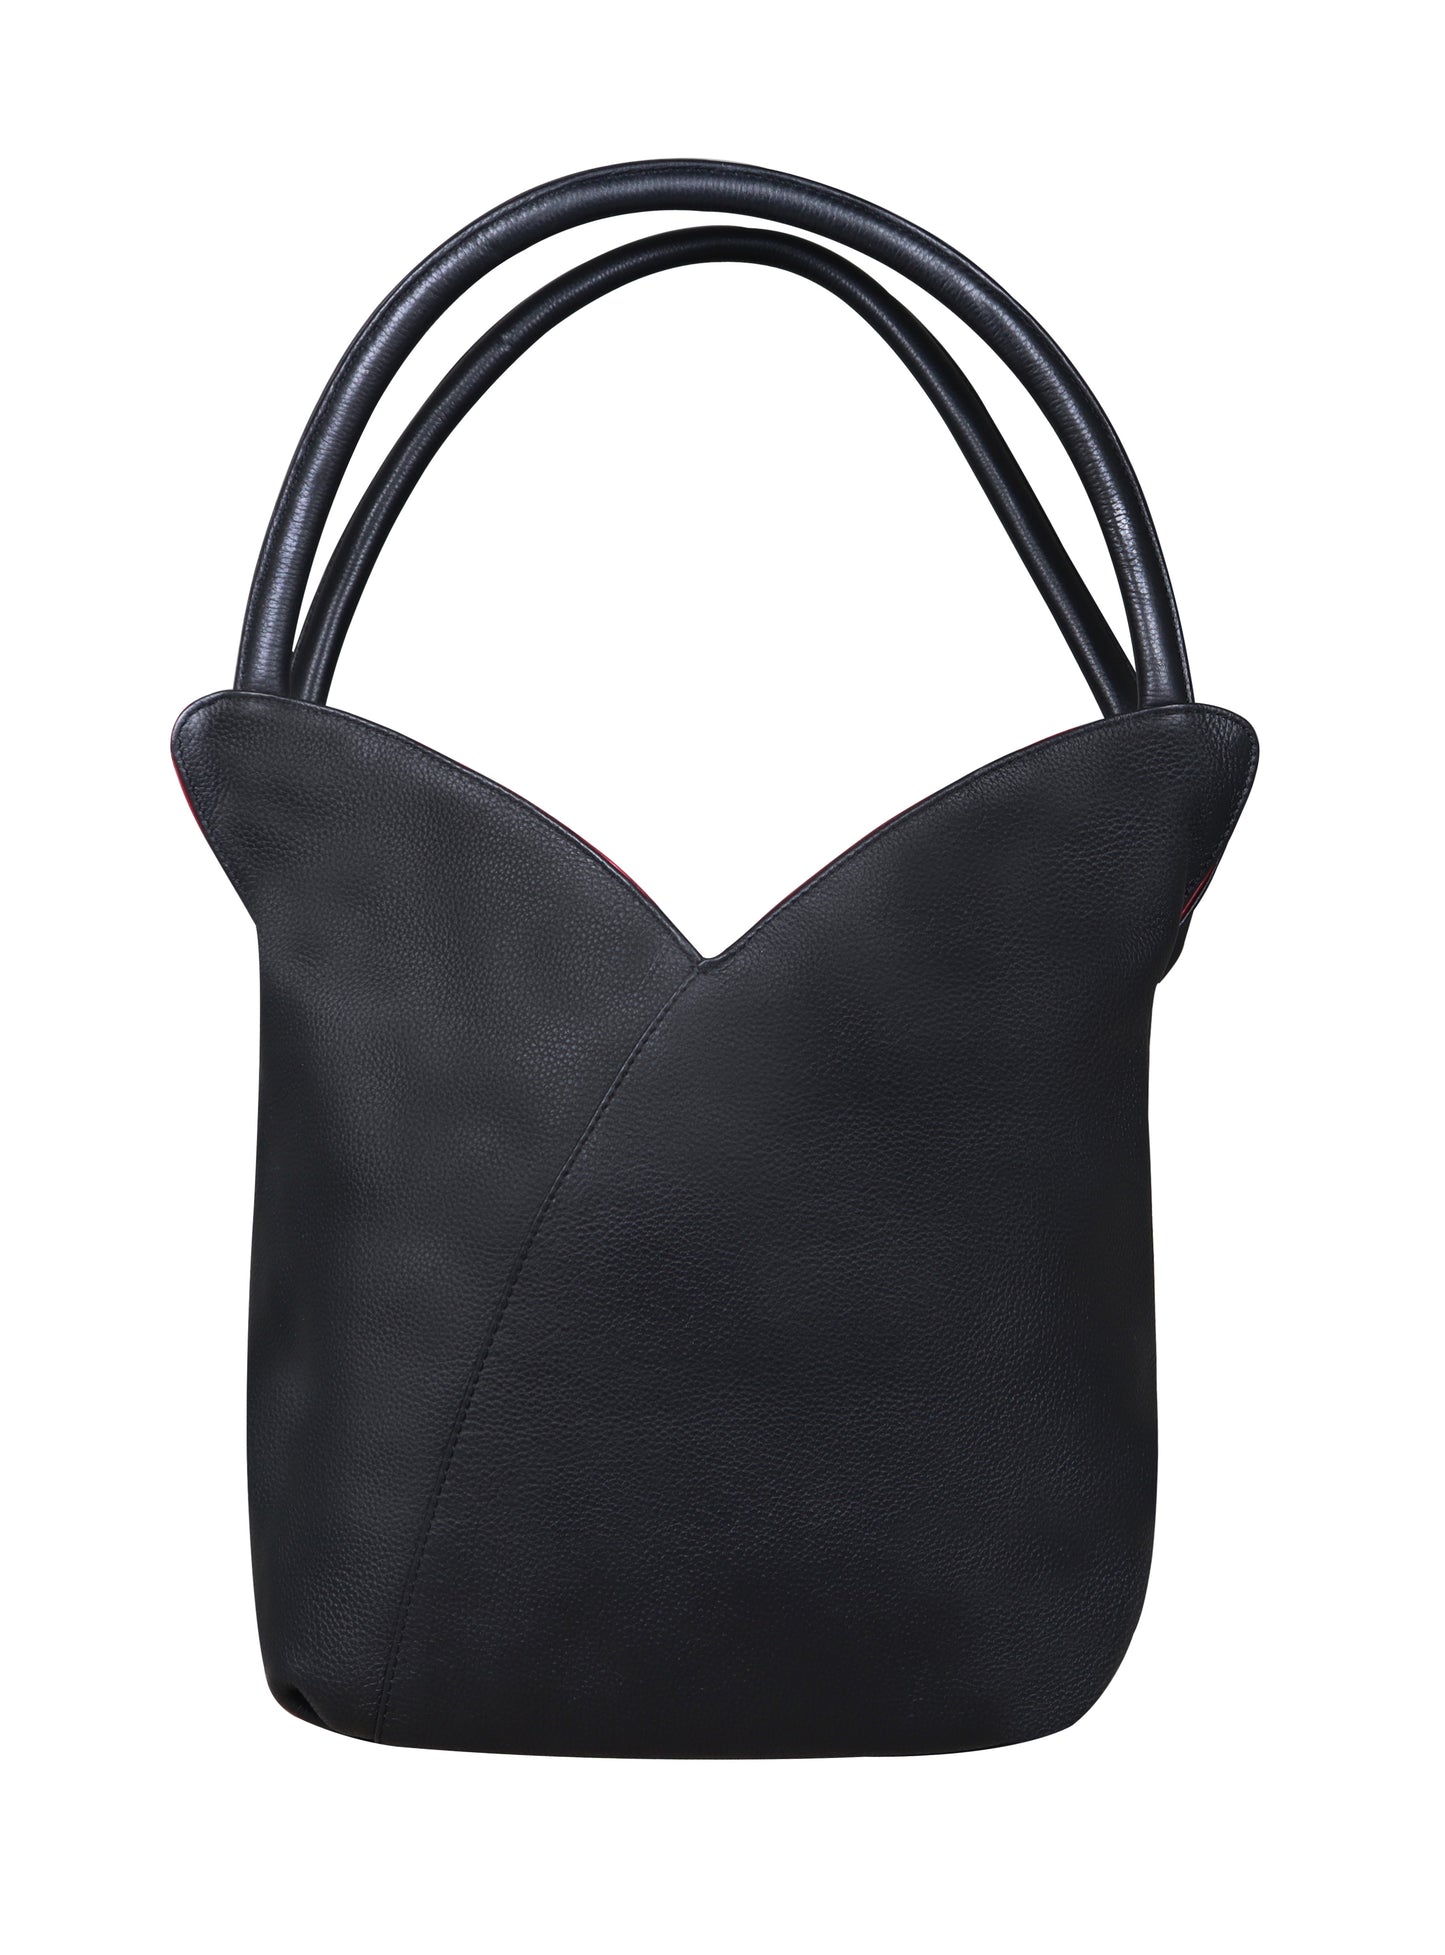 Calfnero Women's Genuine Leather Shoulder Bag (71370-Black-Red)